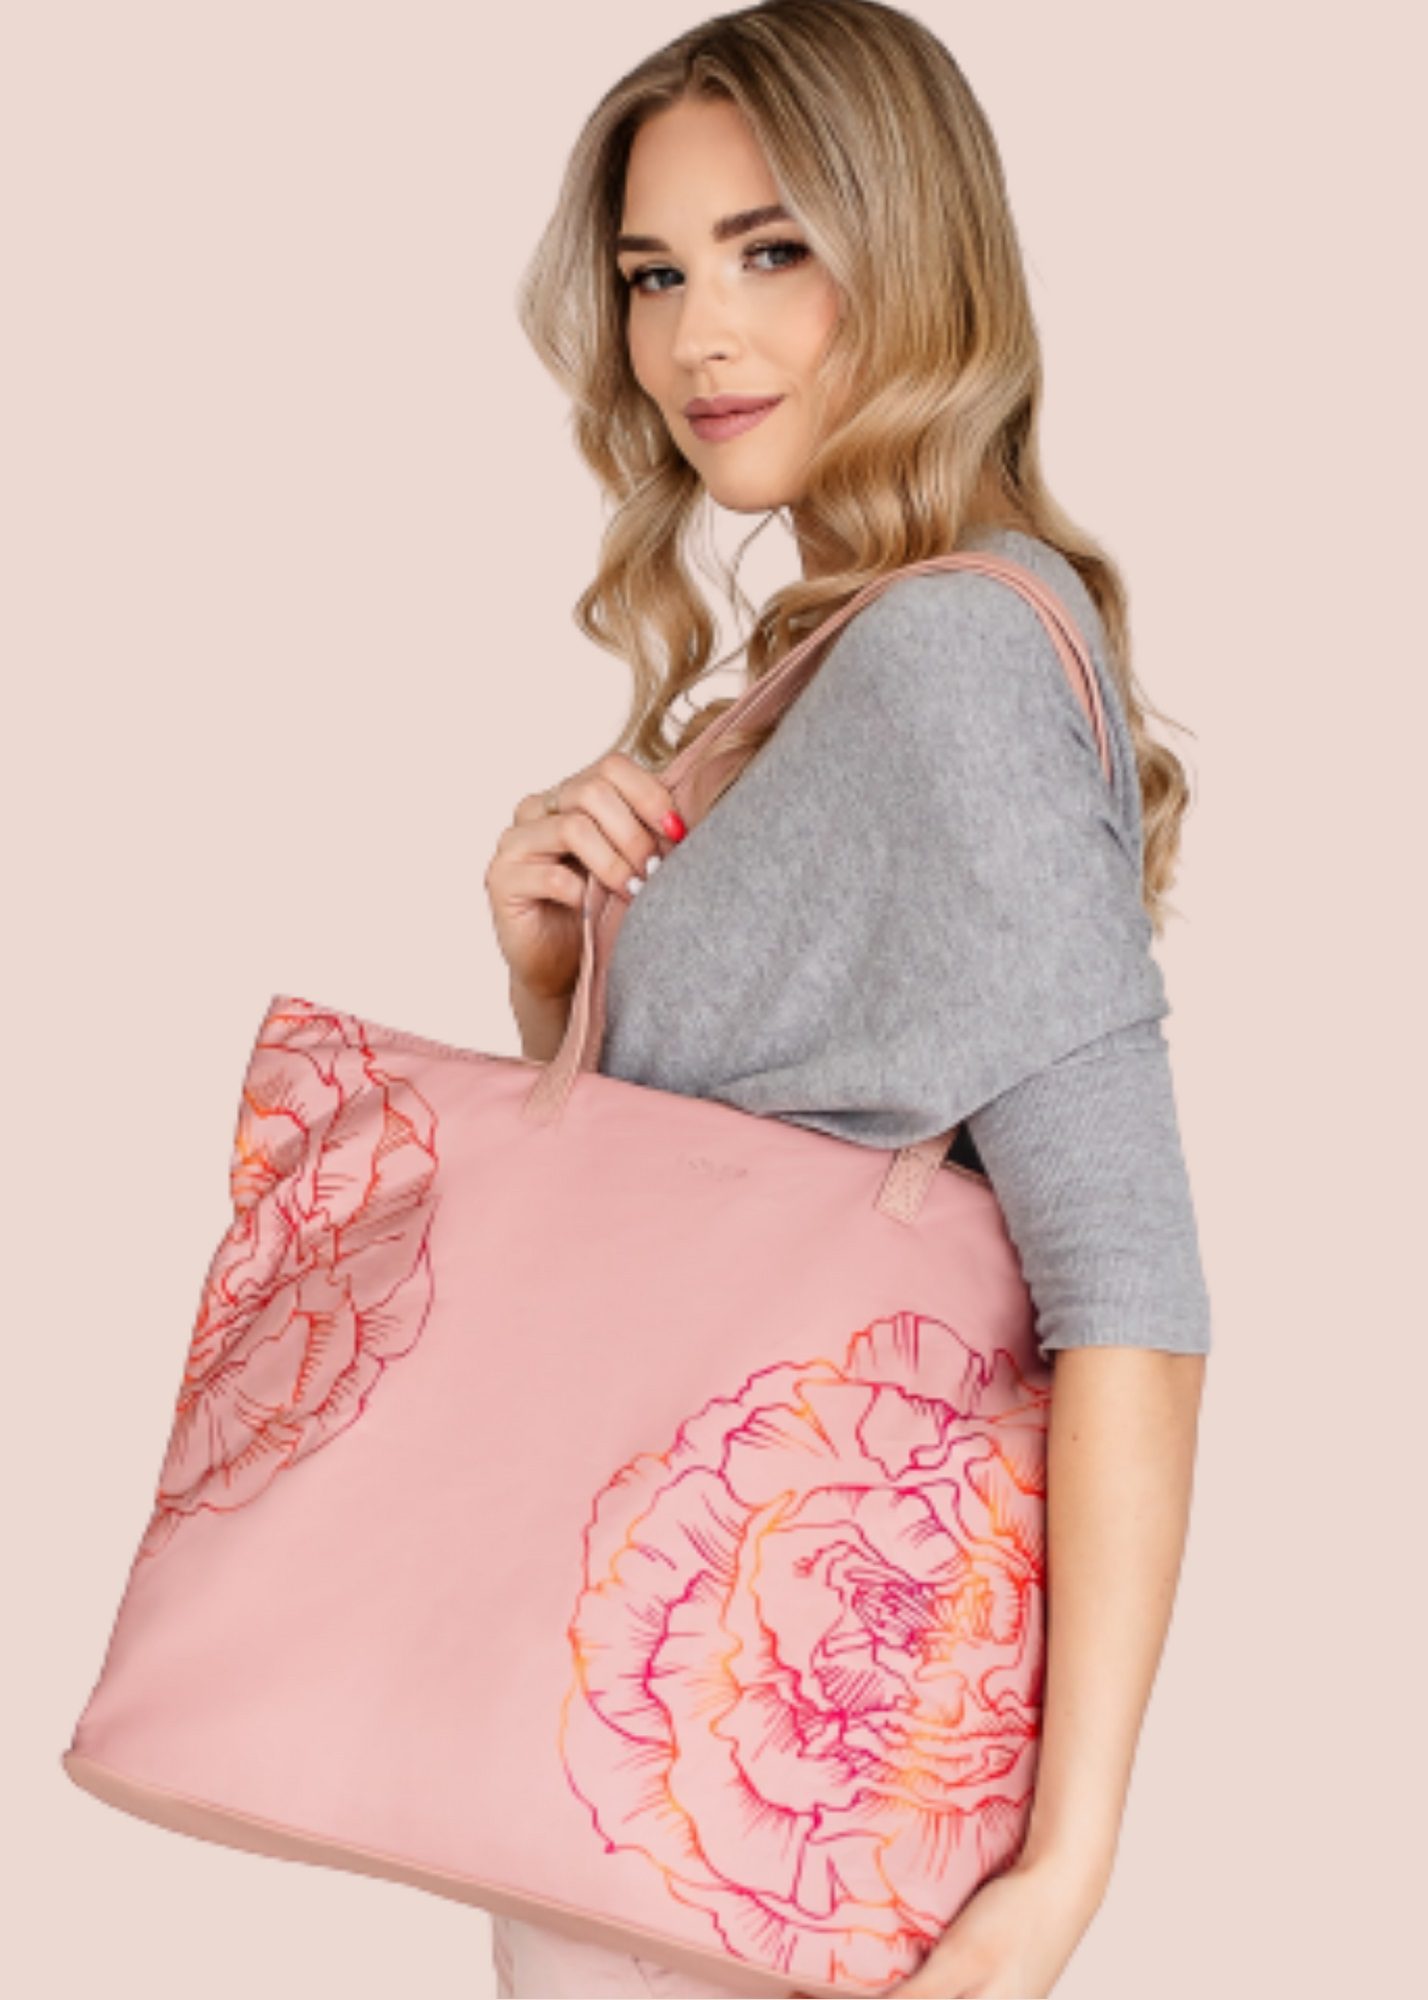 women with pink handbag